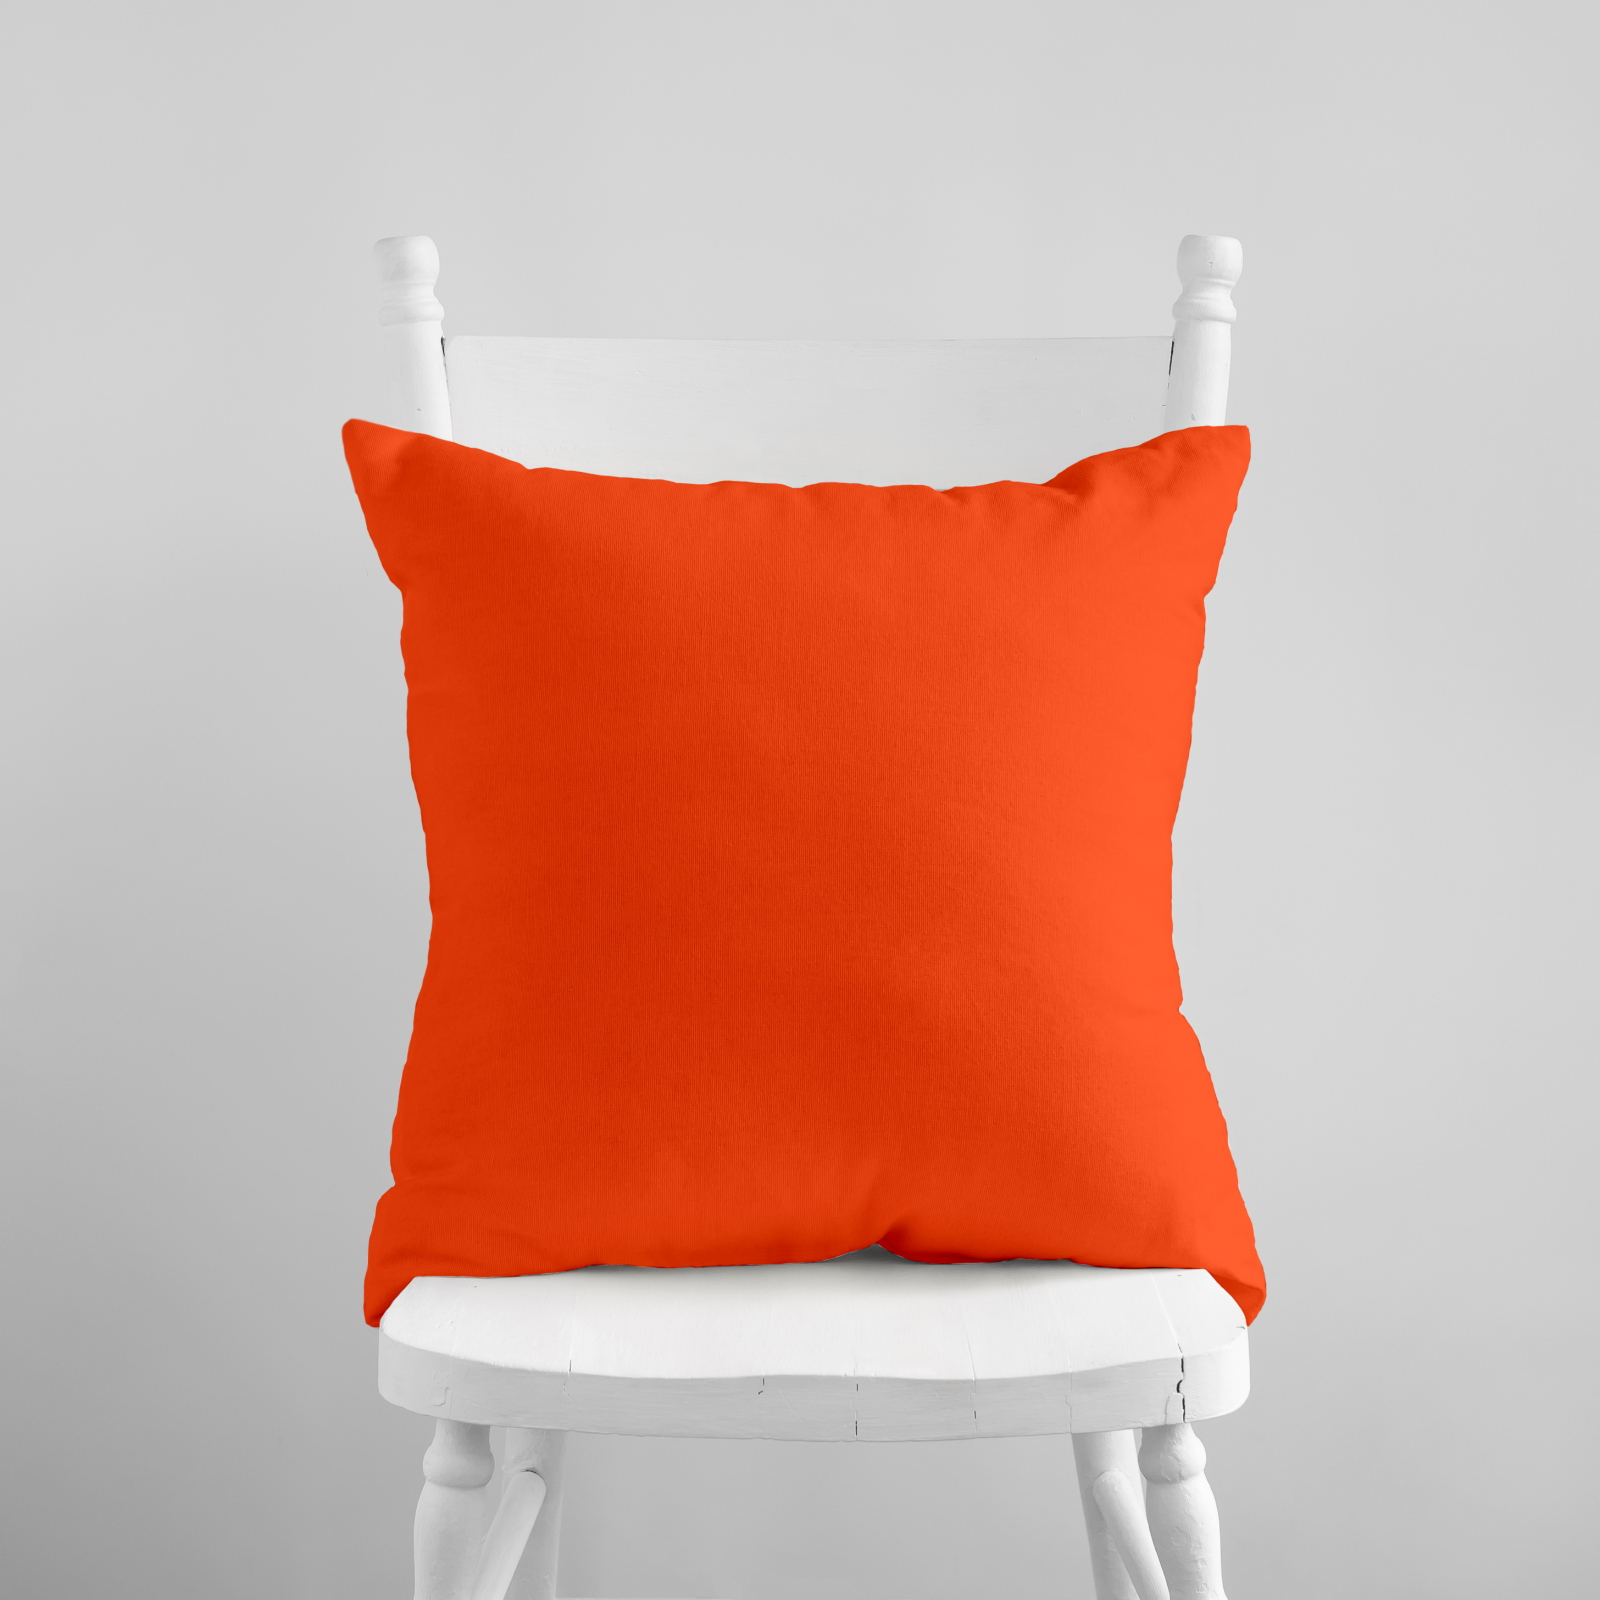 Komplettkissen Polyester-Orange / 50x50 cm